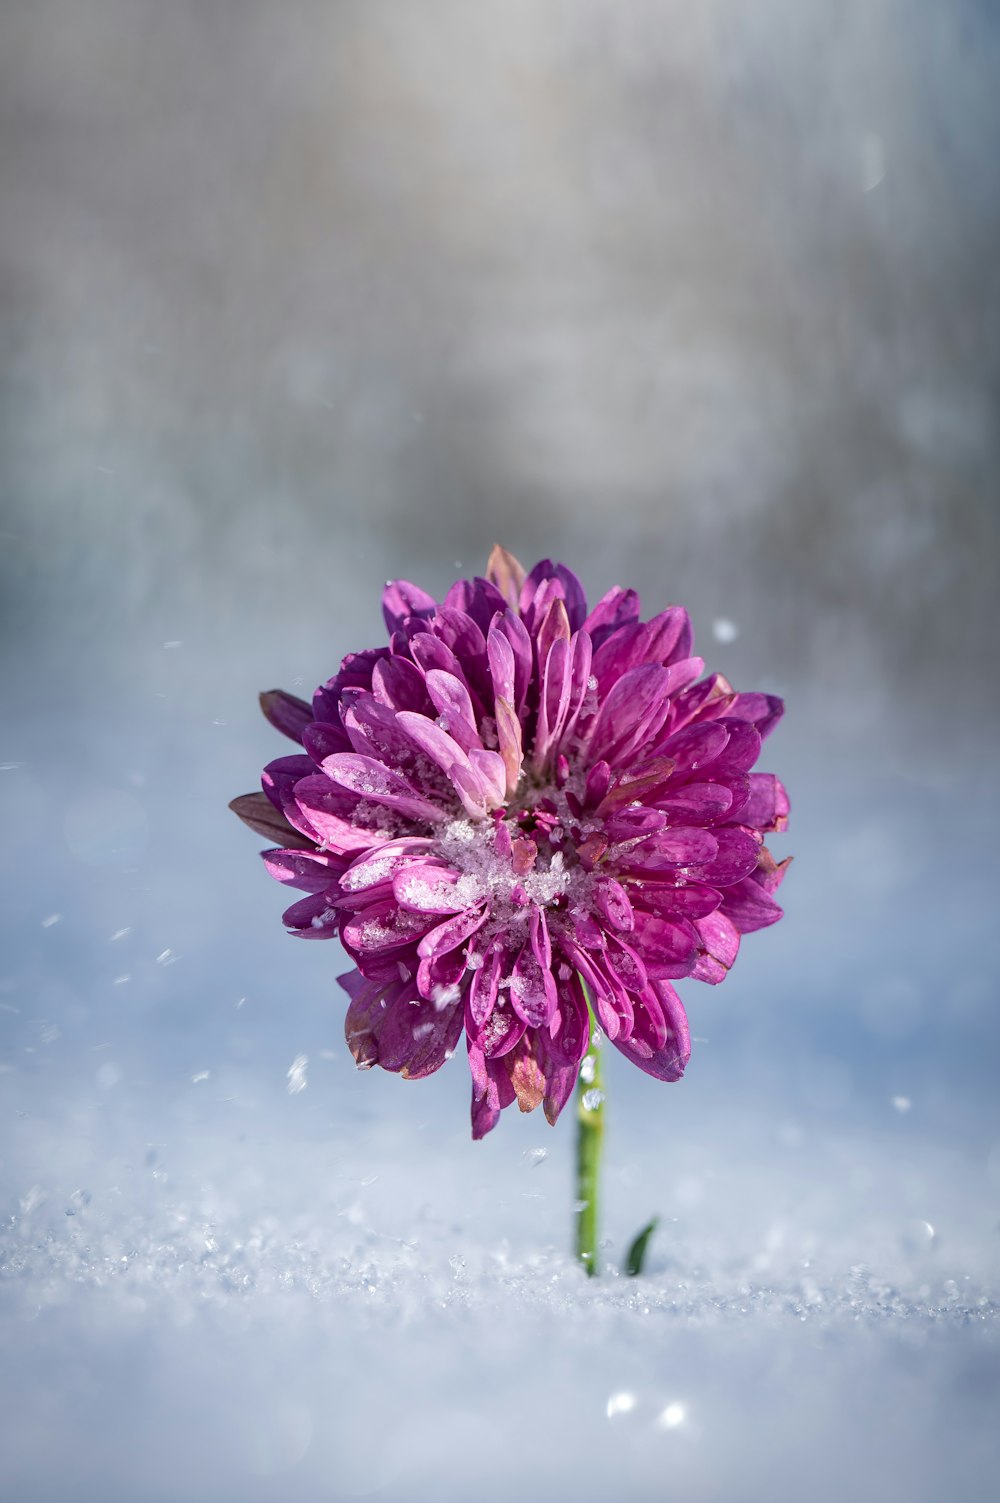 a single purple flower in the snow